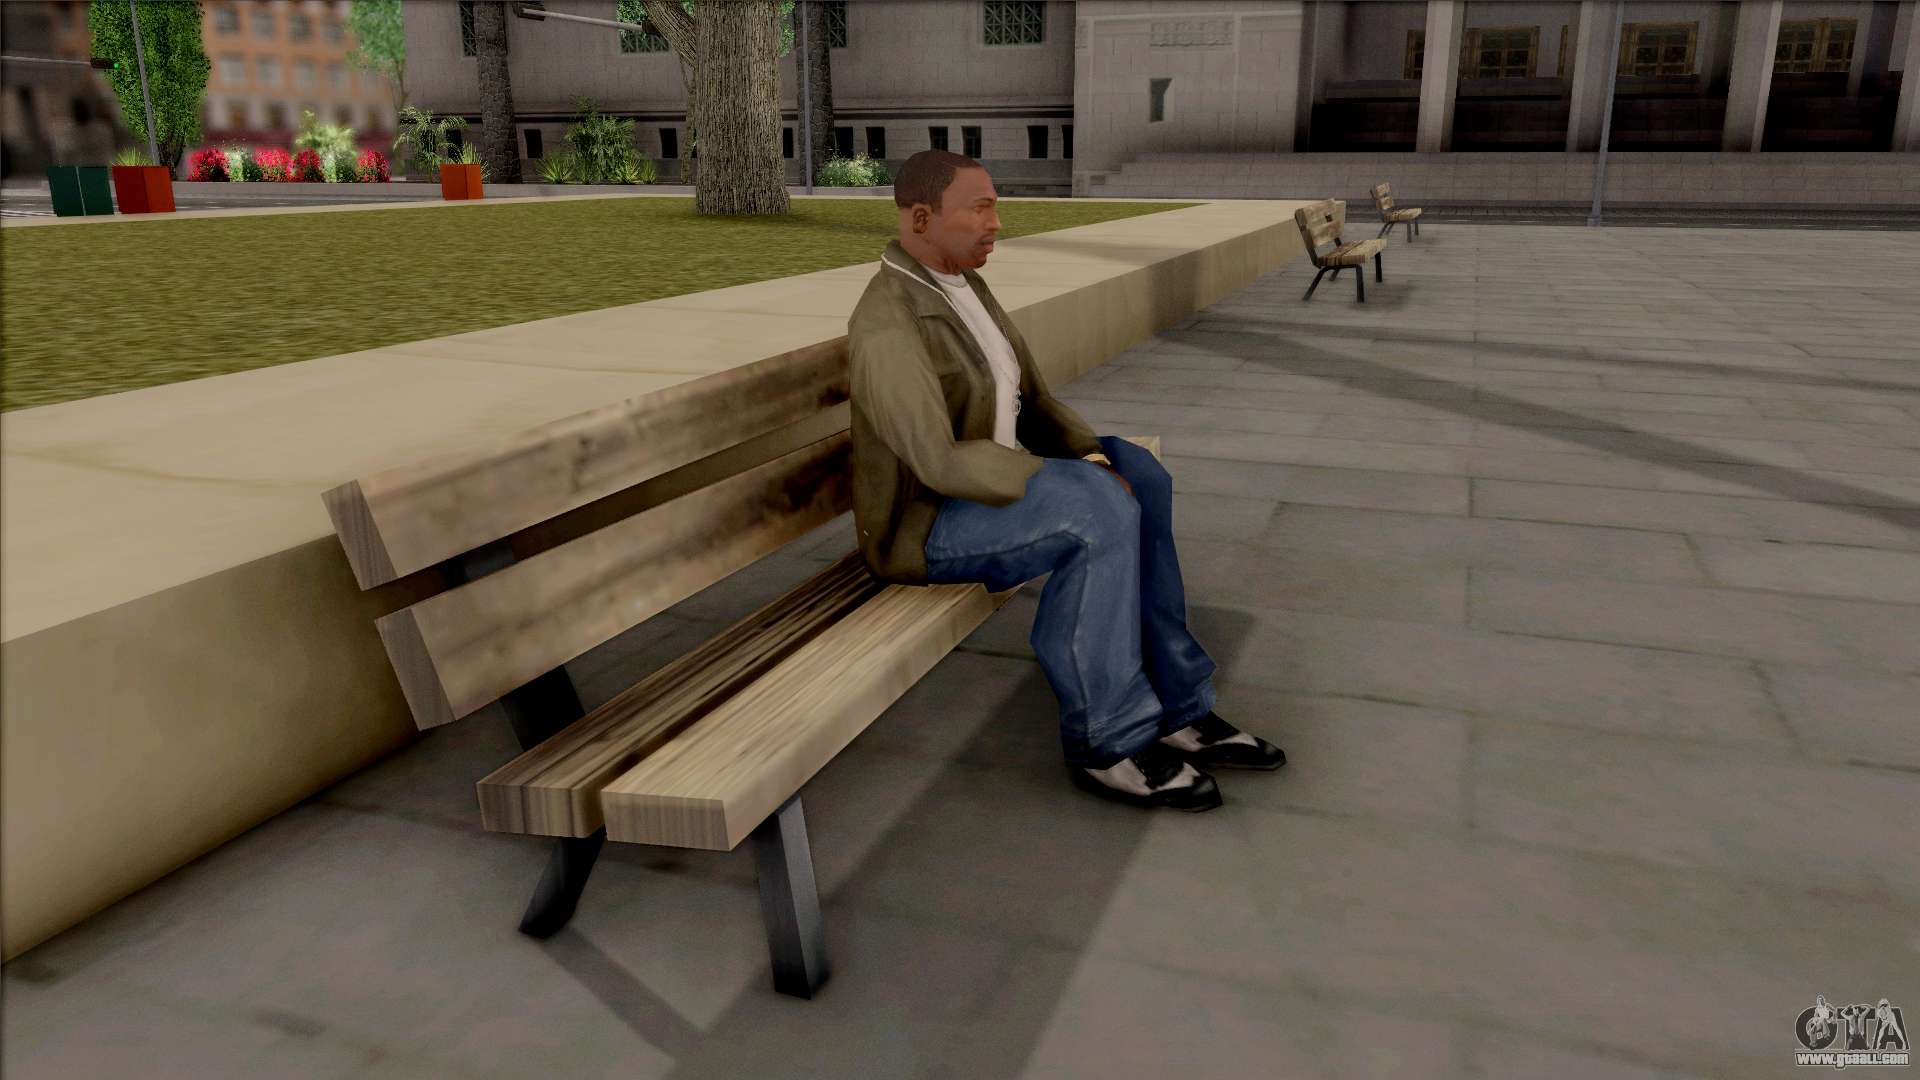 Sit Anywhere Mod 